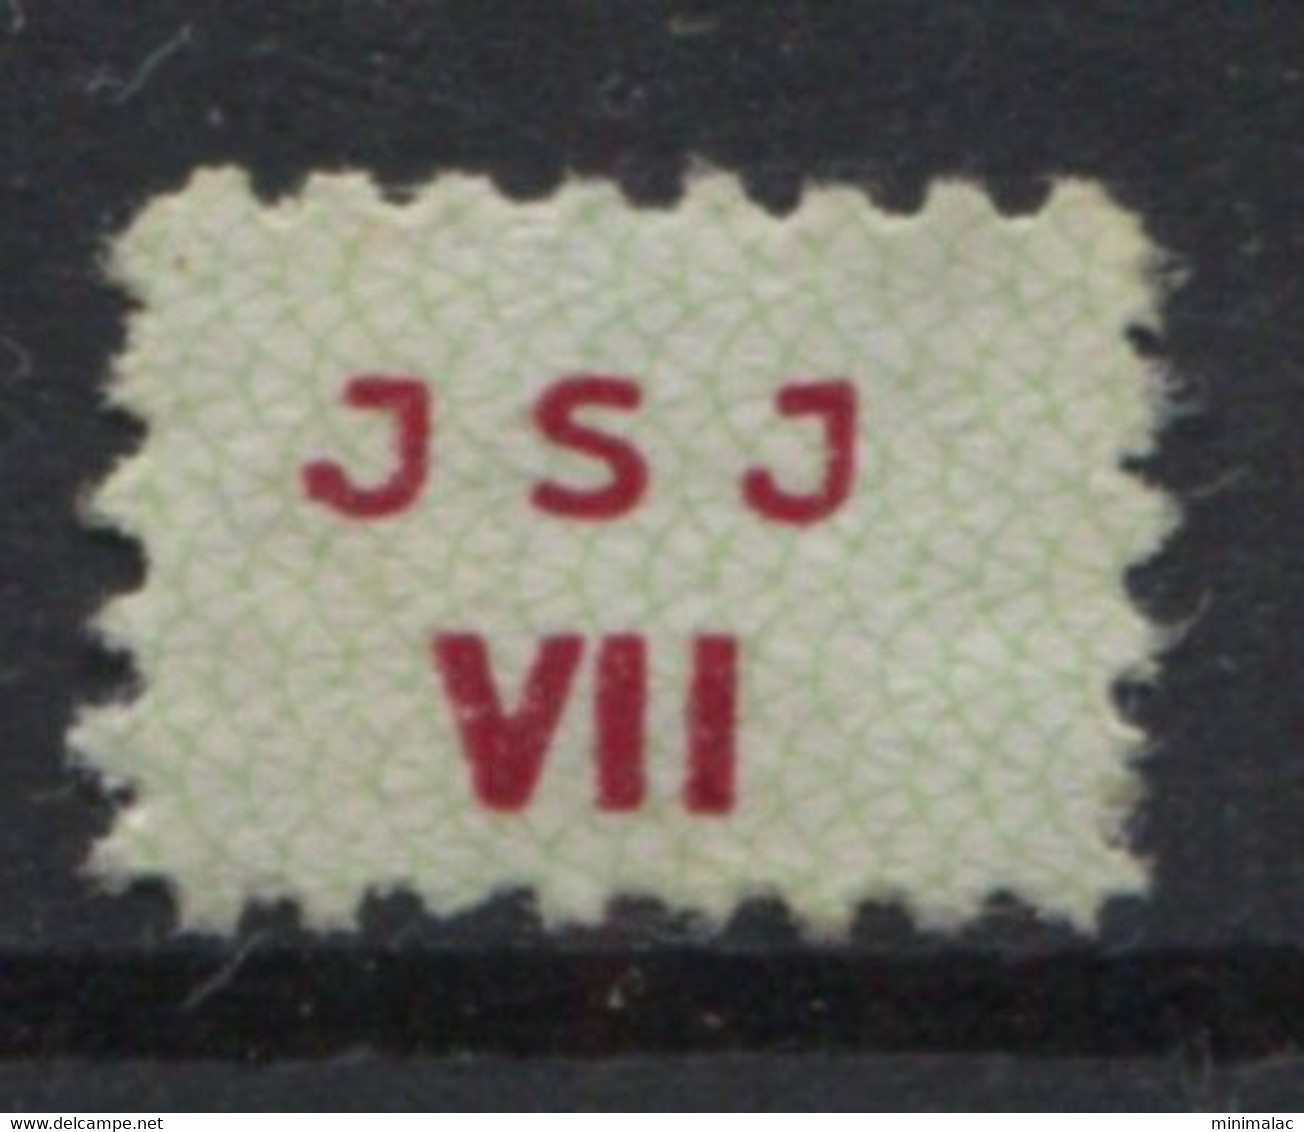 Yugoslavia 1949, Stamp For Membership, JSJ, Labor Union, Administrative Stamp - Revenue, Tax Stamp, VII - Officials